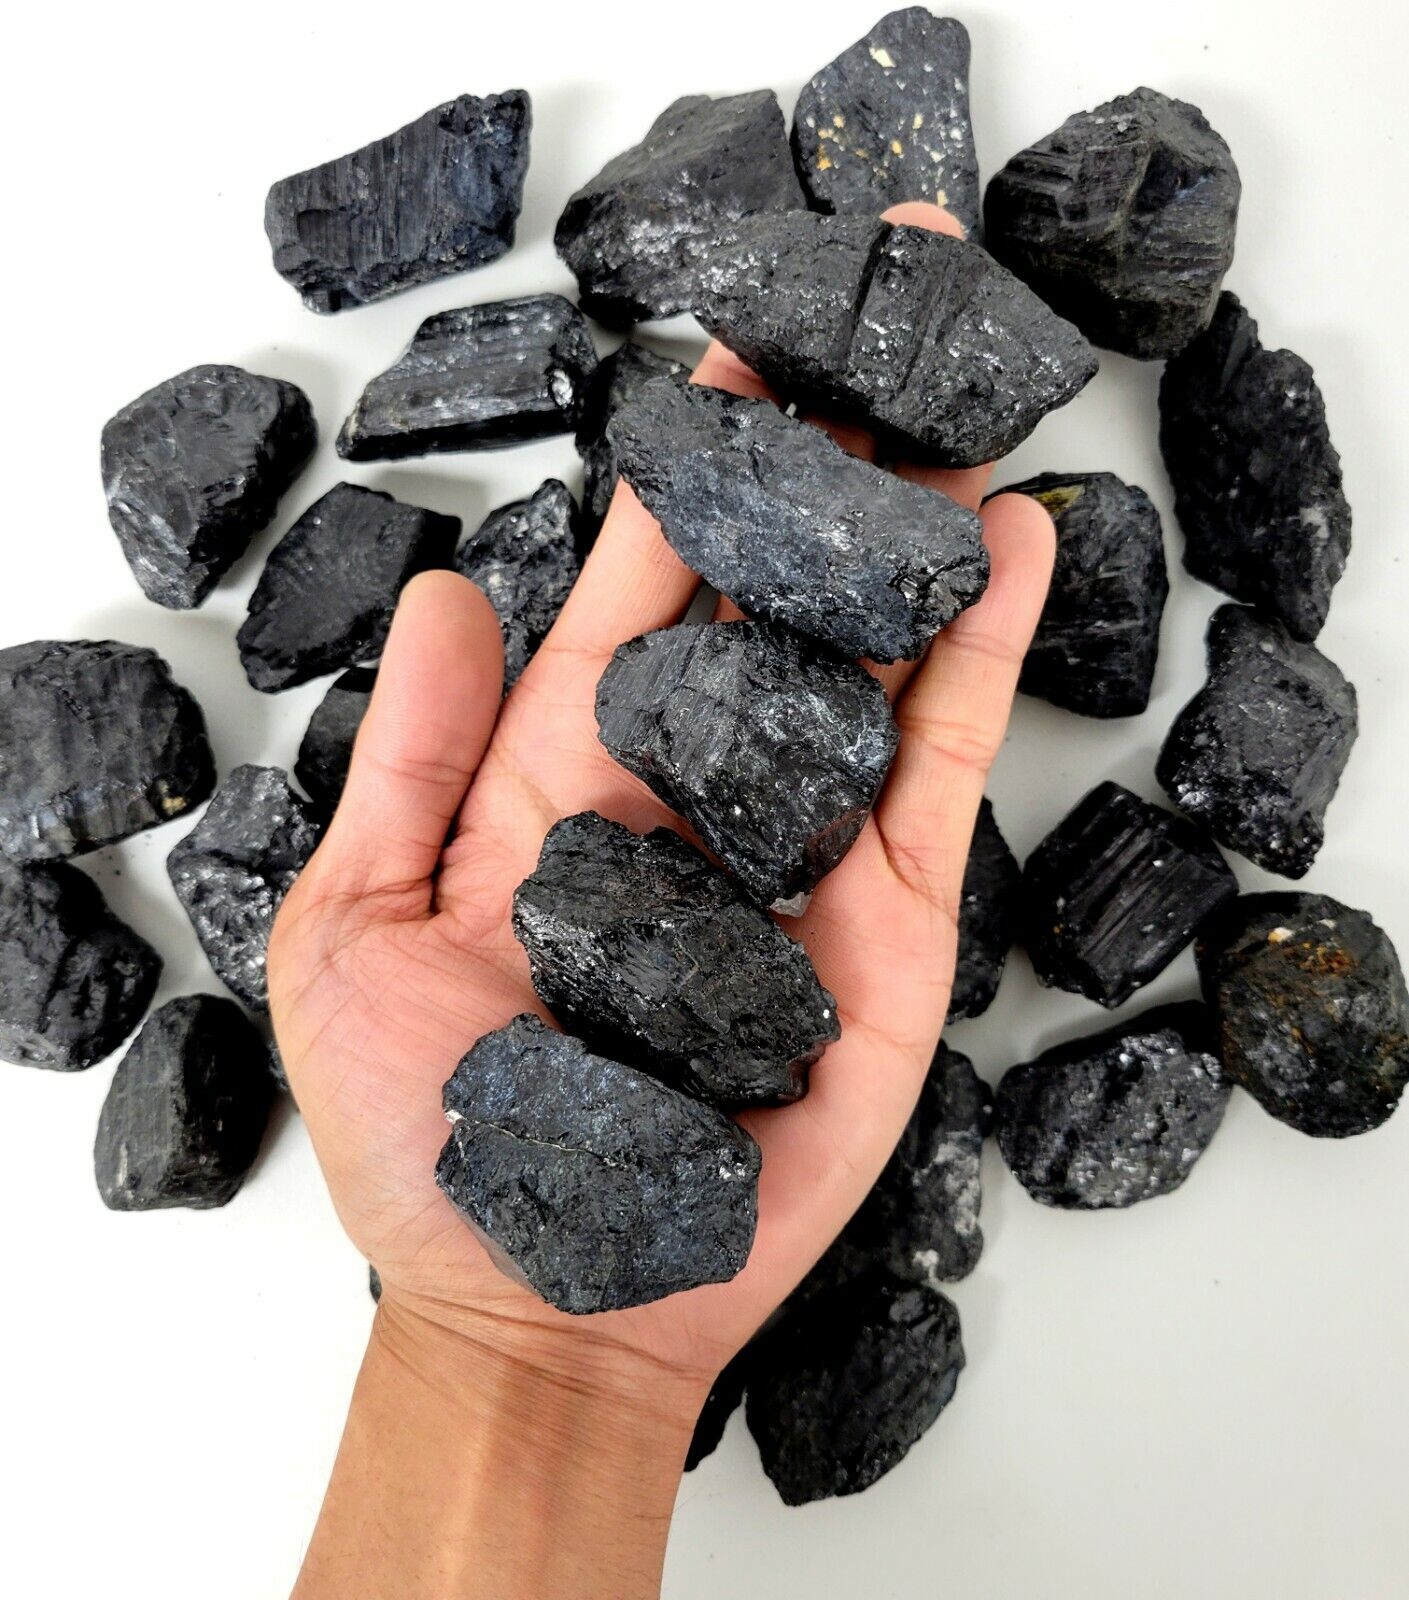 Black Tourmaline Crystals - Large Chunks Rough Stones Bulk Raw Healing Crystals